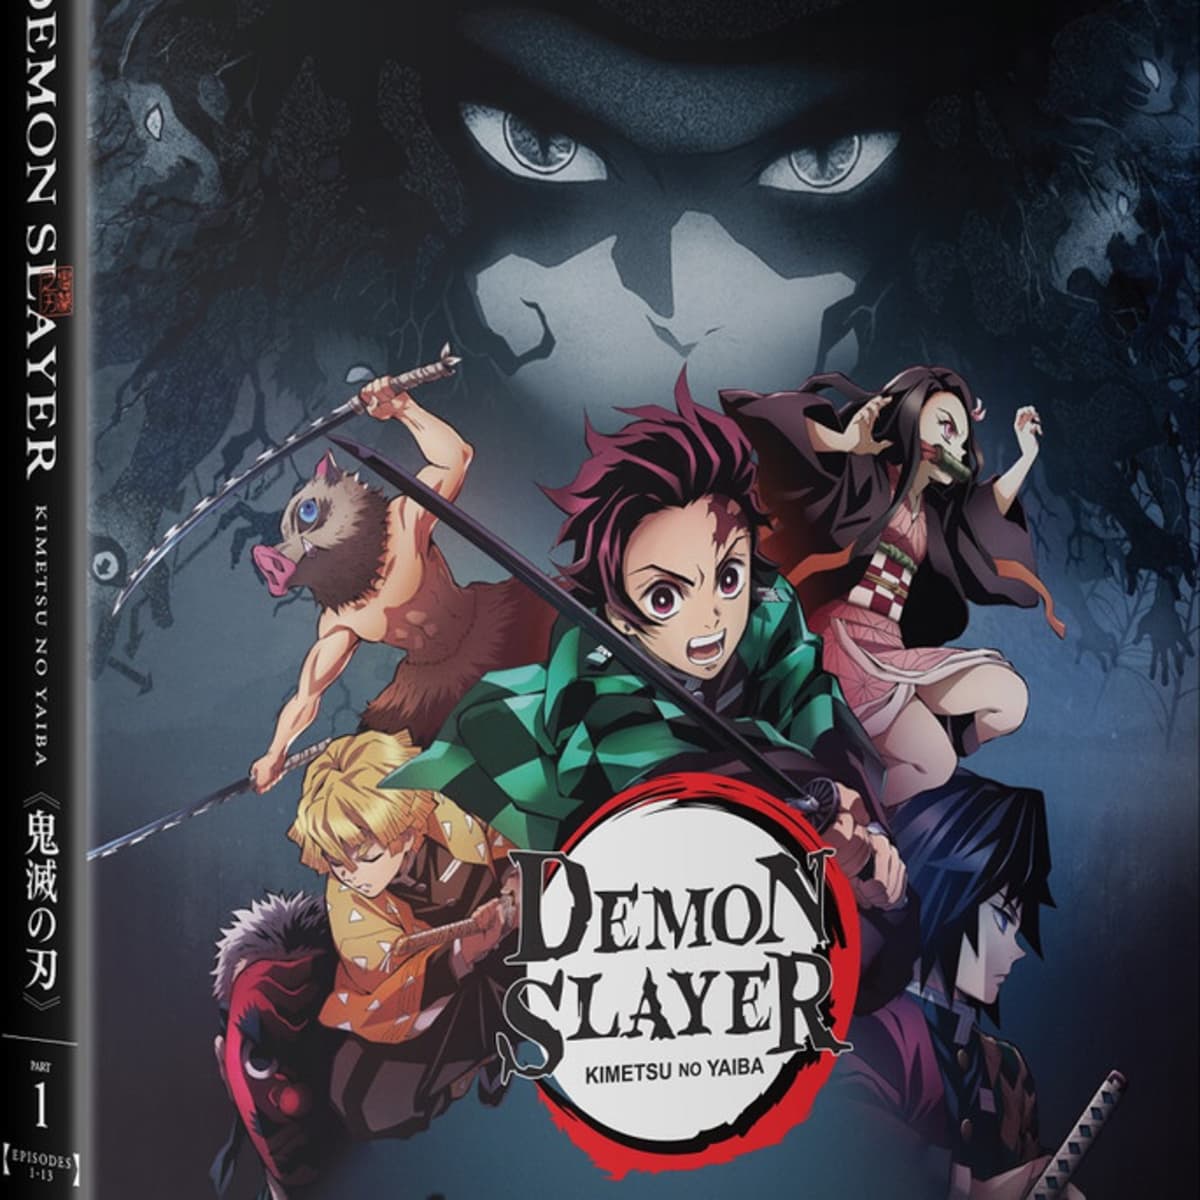 Demon Slayer Review: Netflix Anime Reinvents Classic Action Tropes